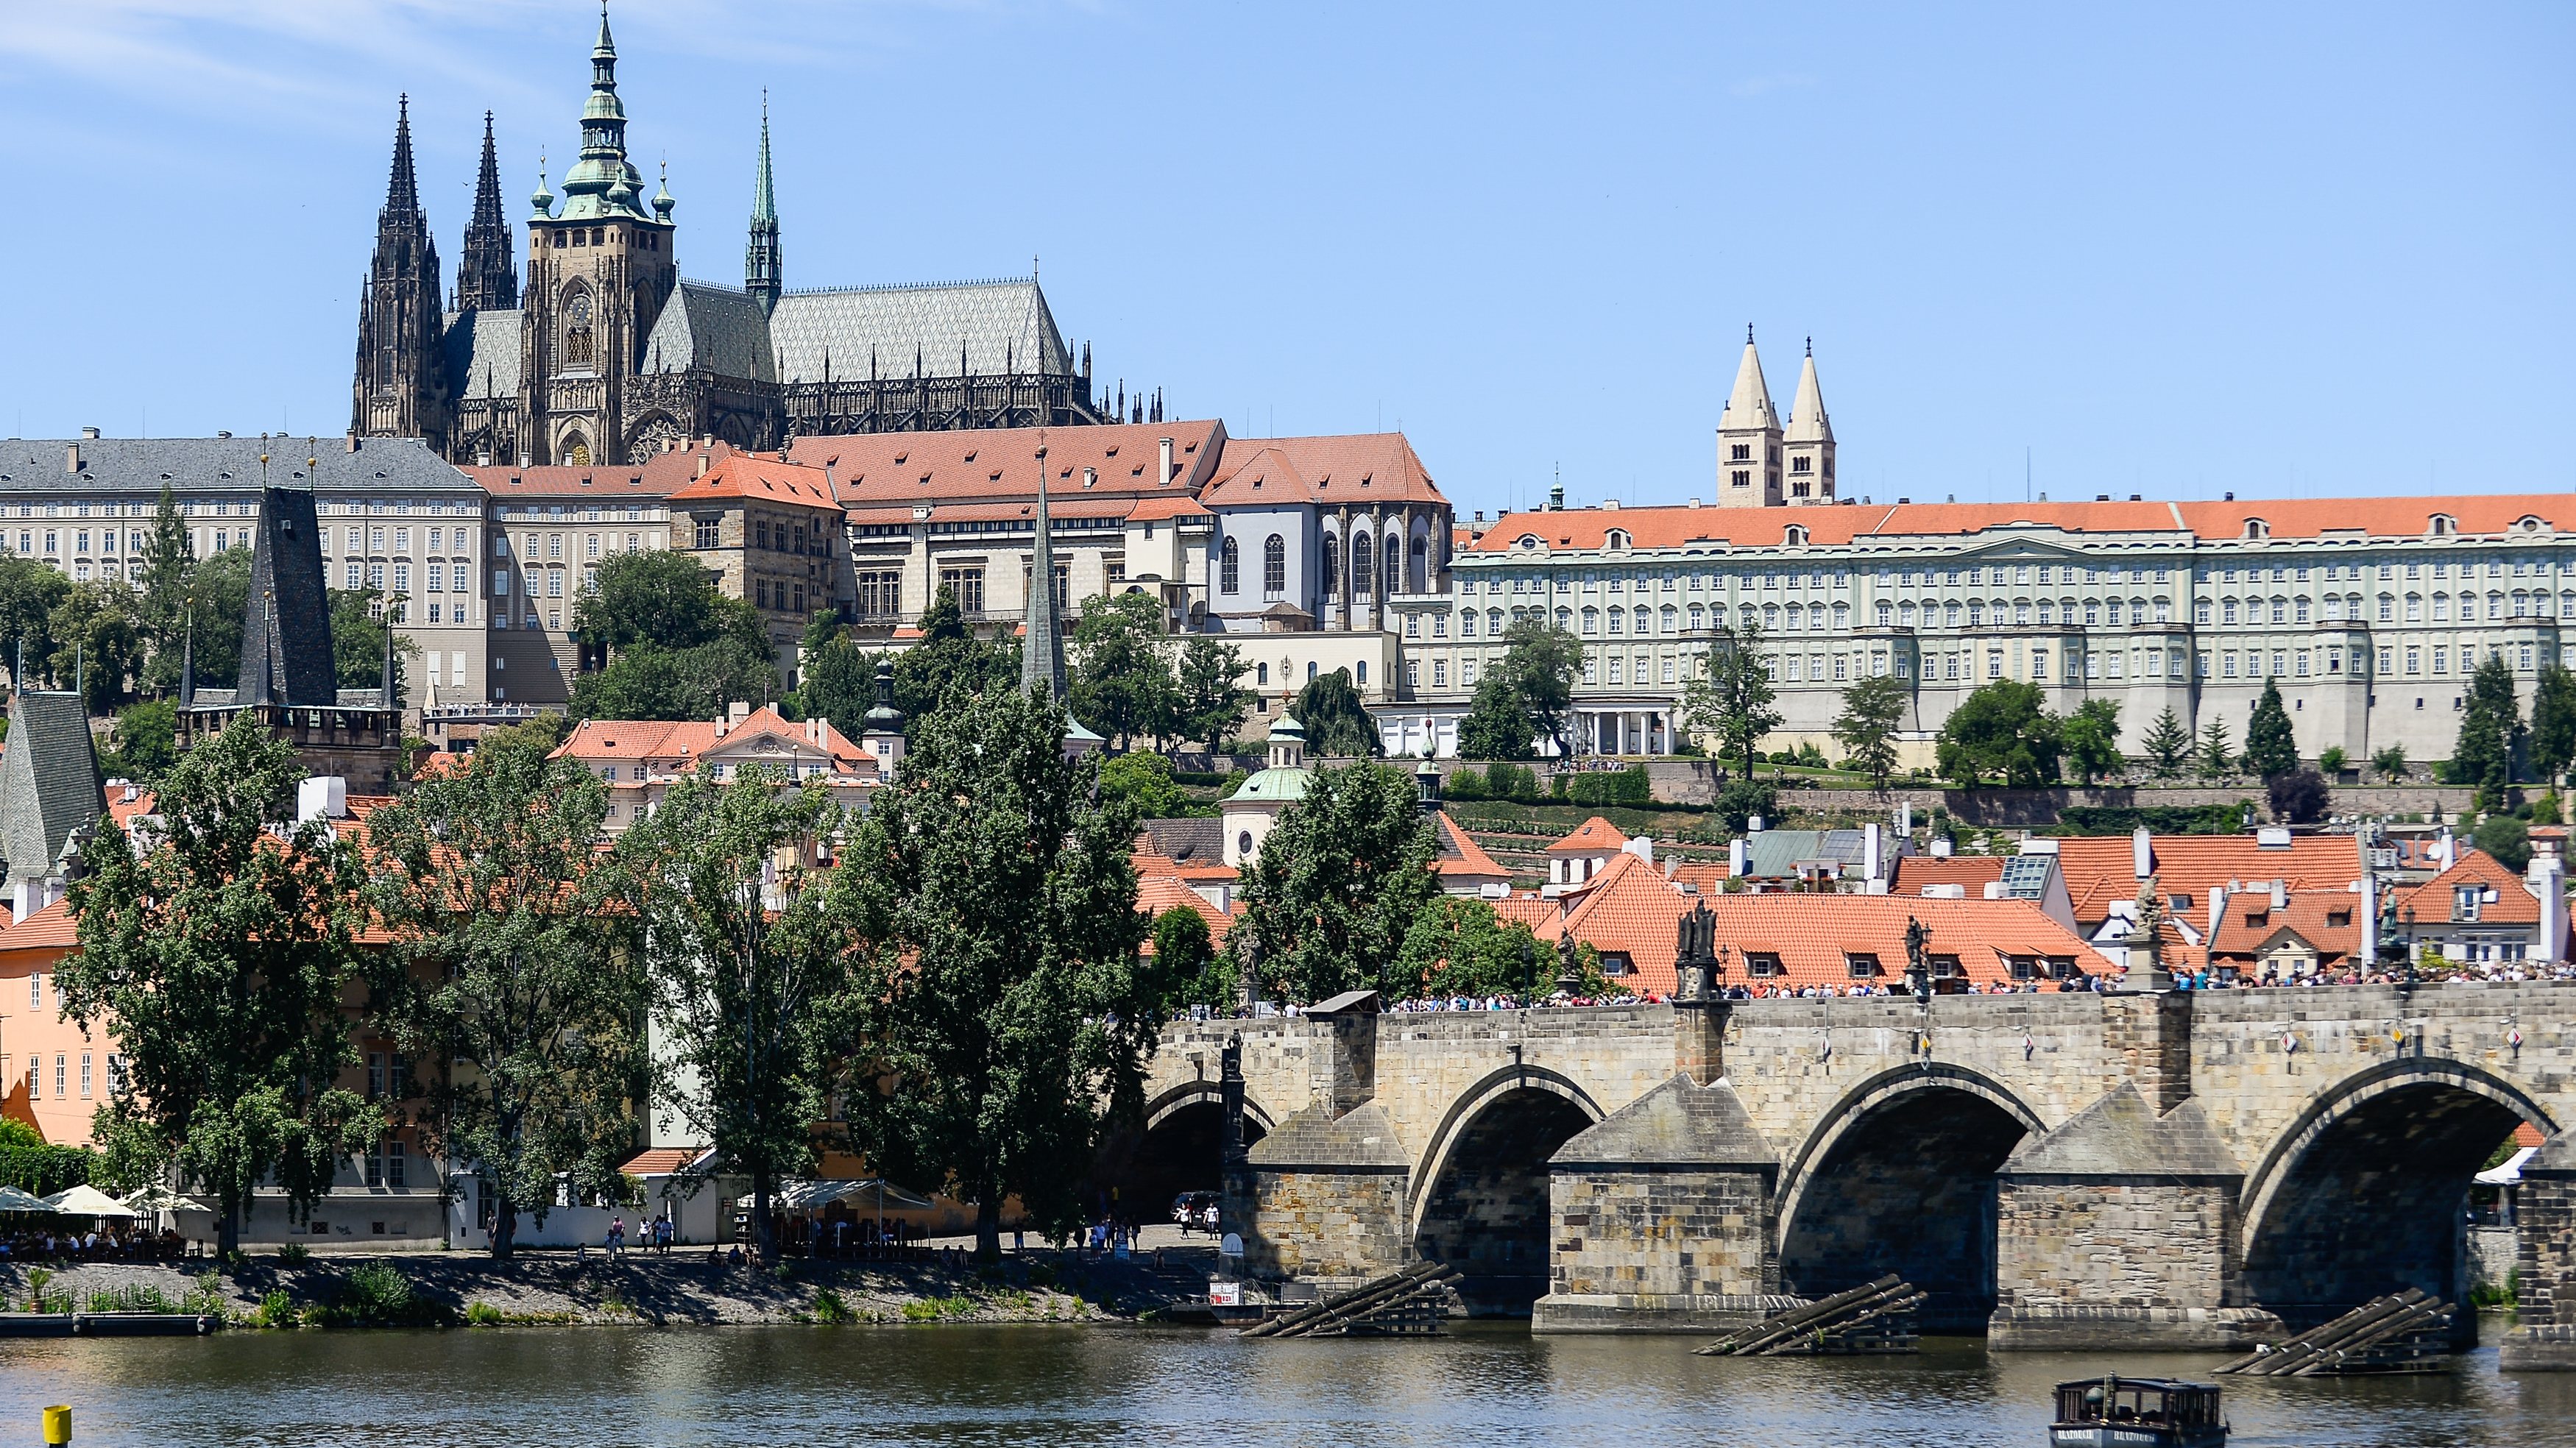 A view of the Prague Castle